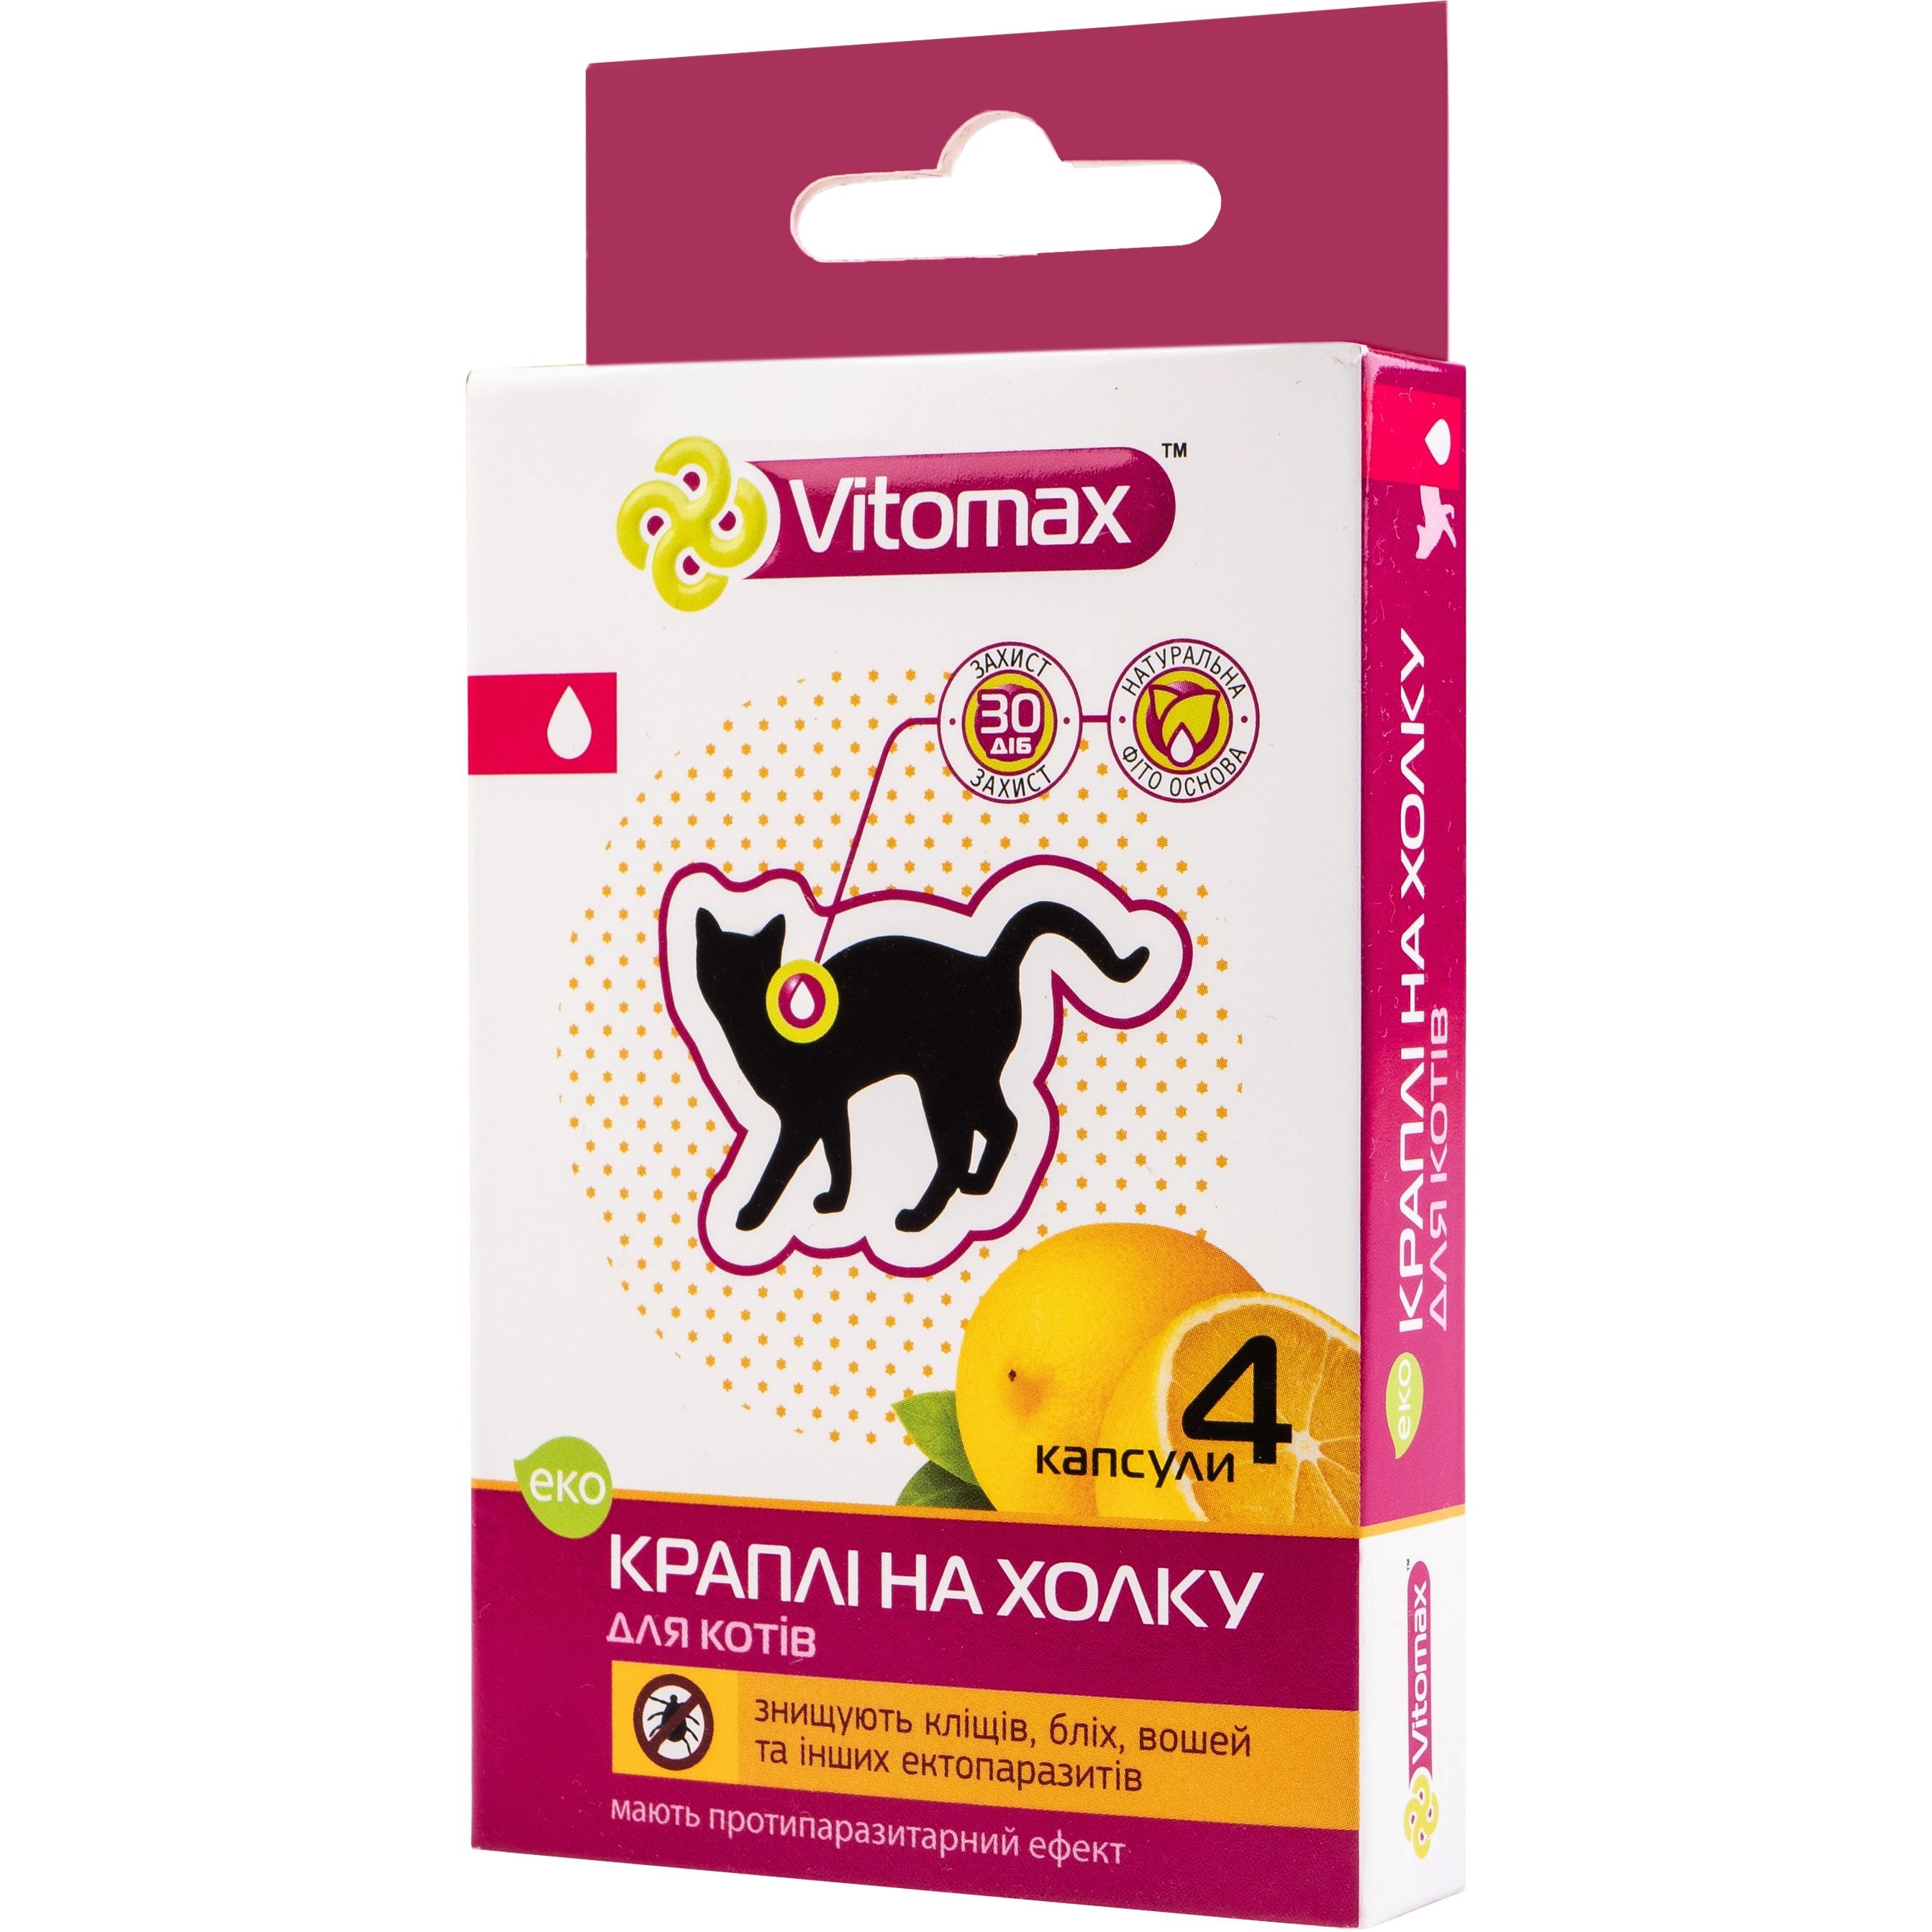 Эко-капли на холку Vitomax противопаразитарные для кошек, 0.6 мл, 4 пипетки - фото 2